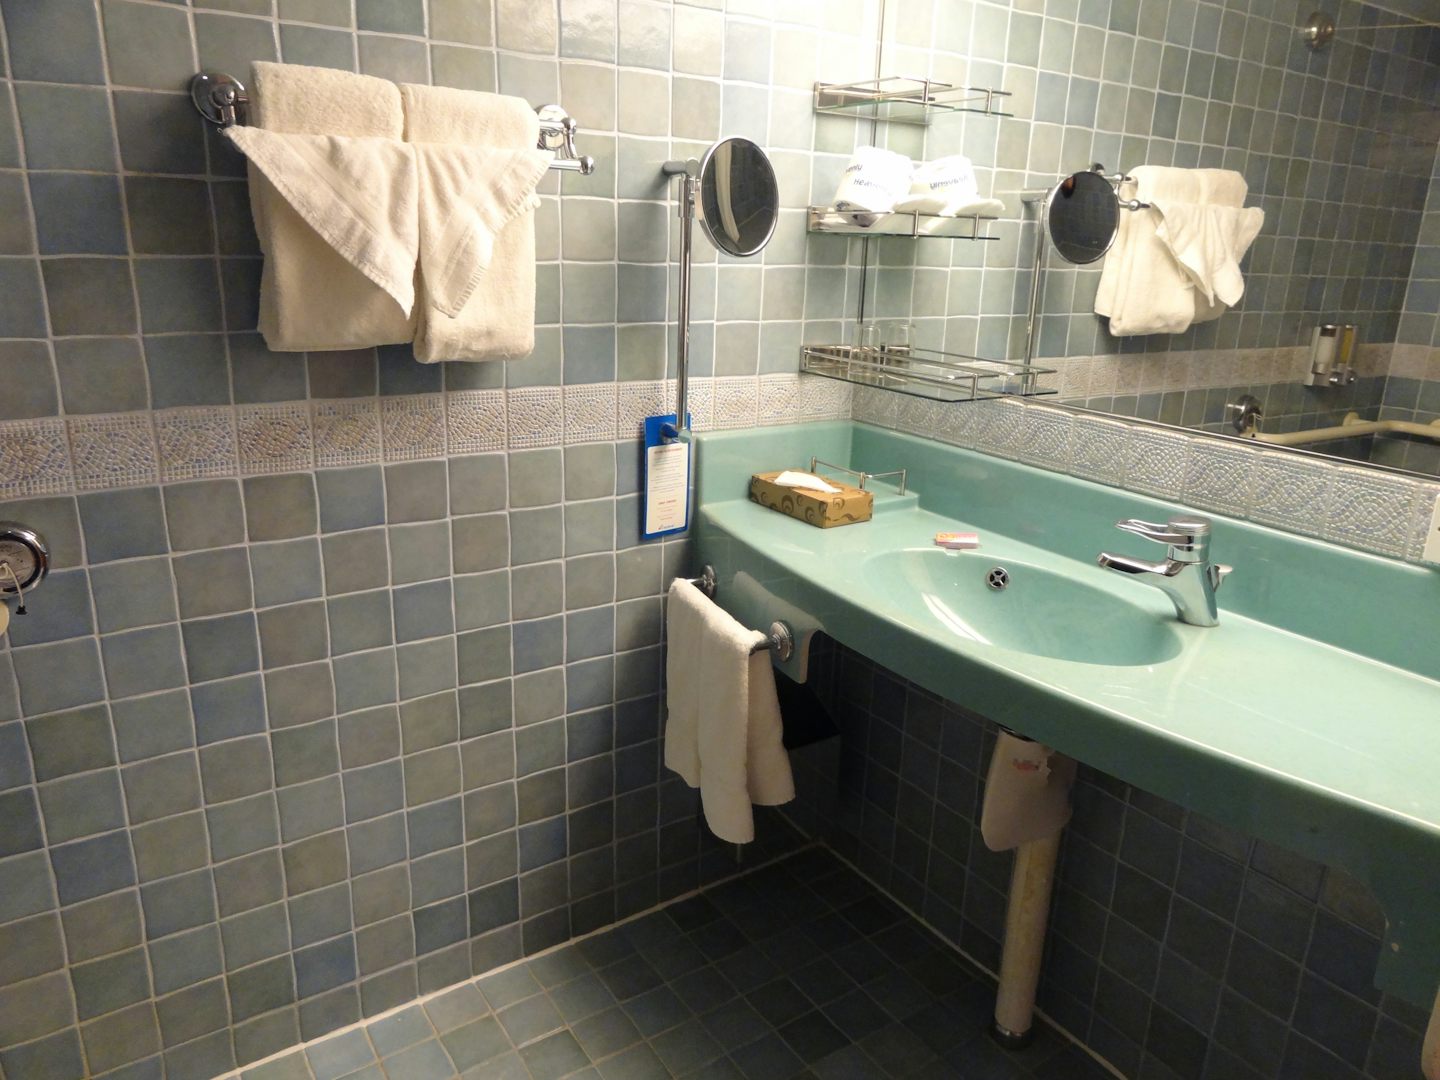 Bathroom basin and mirror area